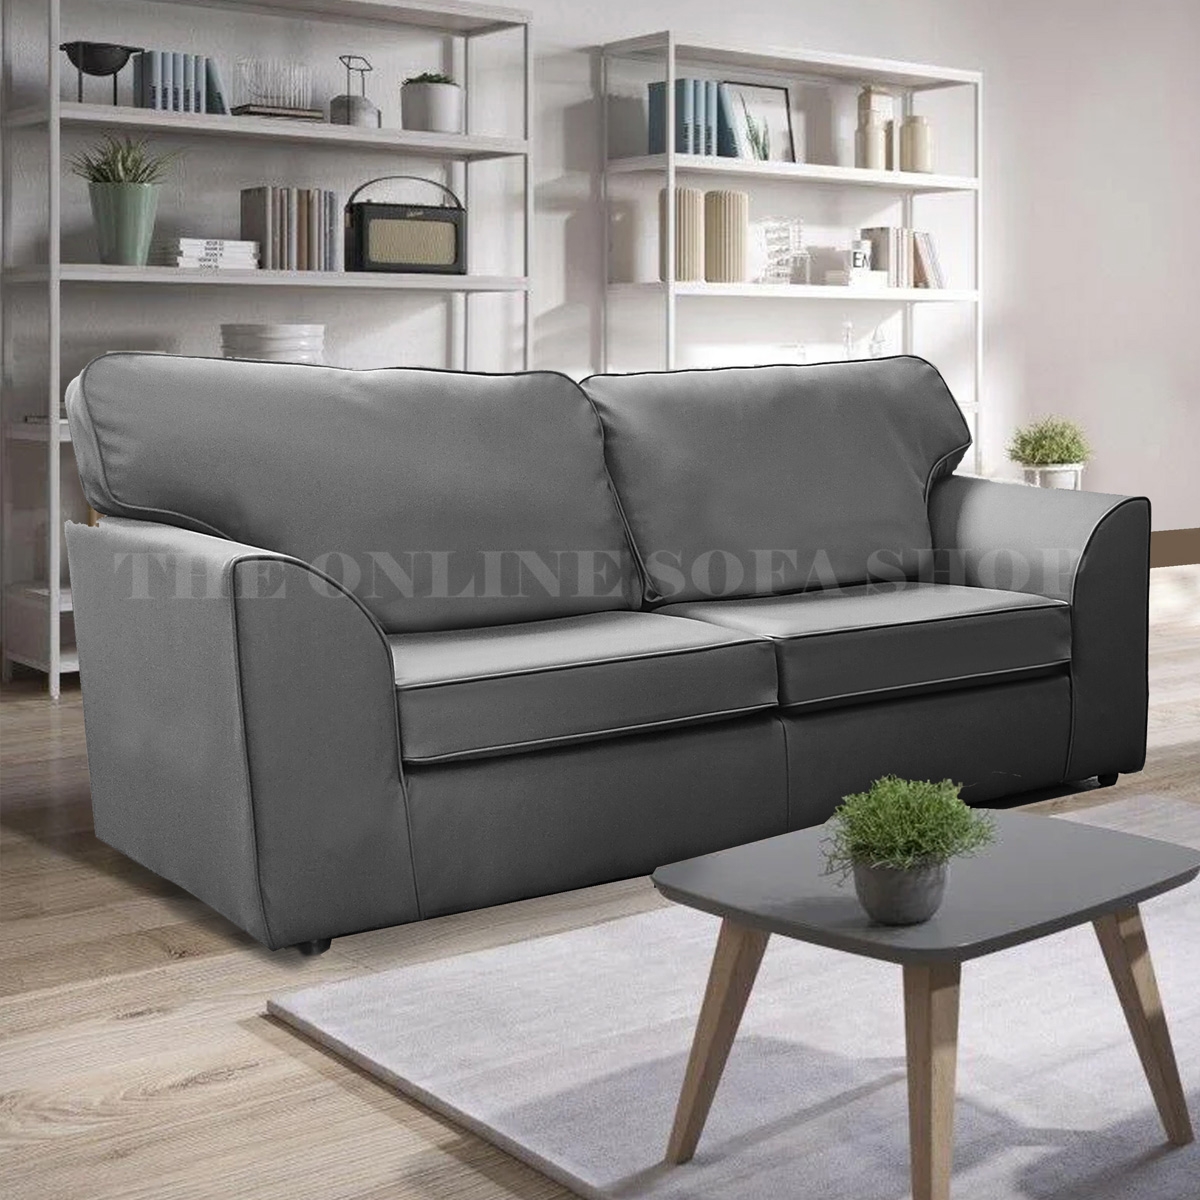 Danbury 3 Seater Leather Sofa – Grey – The Online Sofa Shop